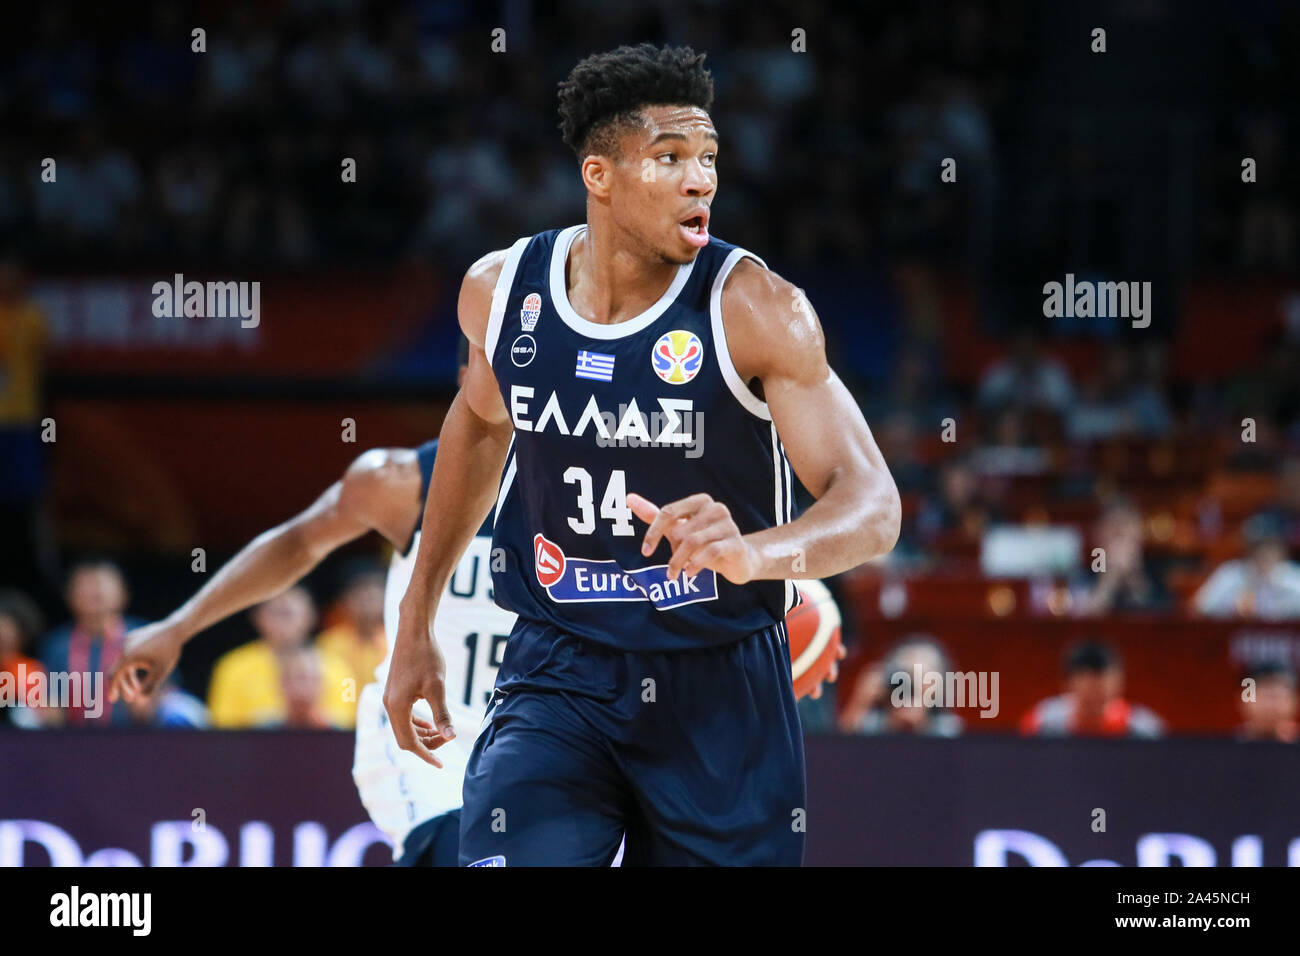 Best of Greece: 2019 FIBA World Cup Photo Gallery